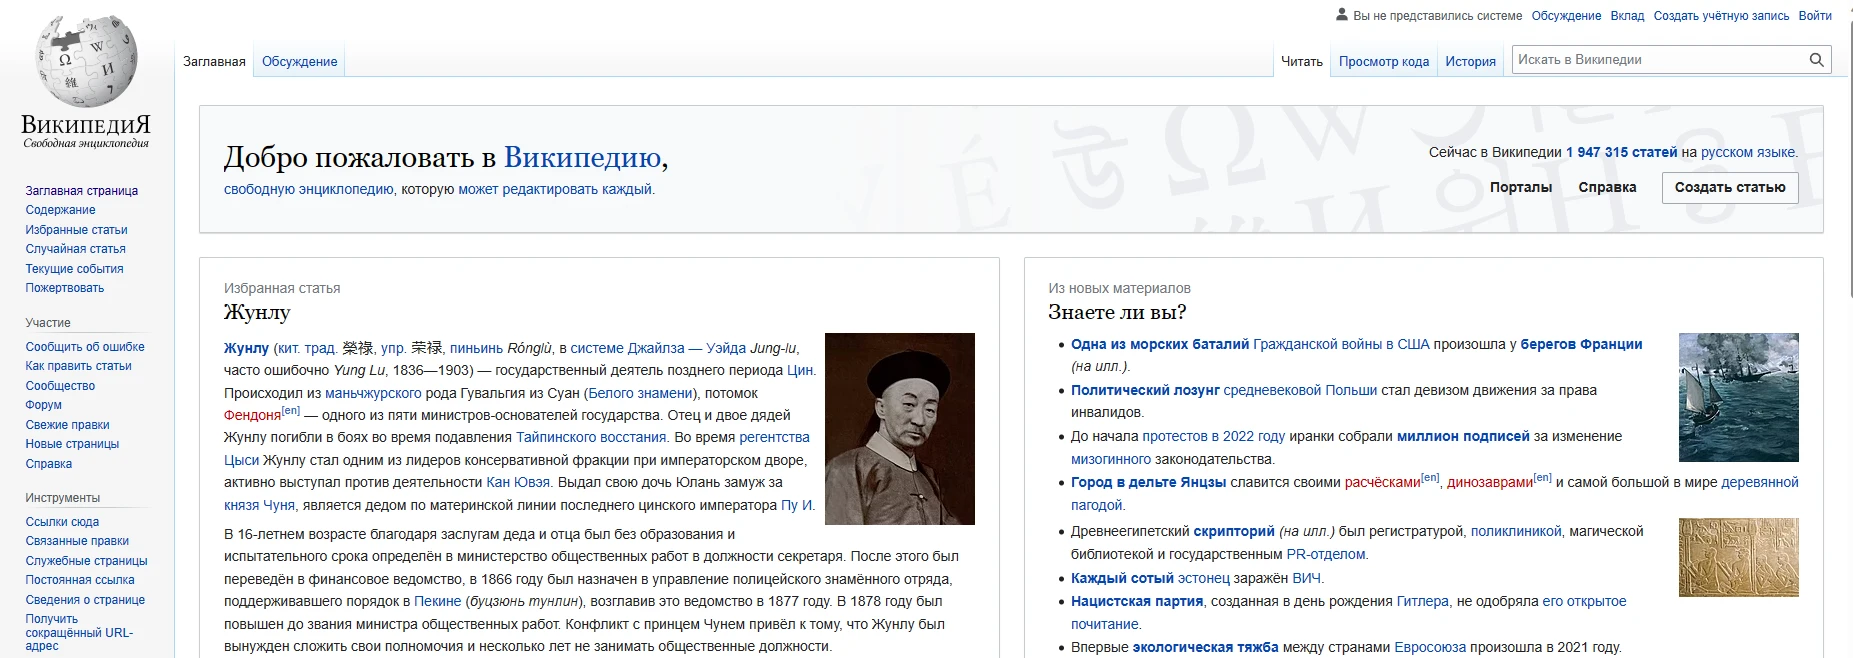 Структура сайта Wikipedia